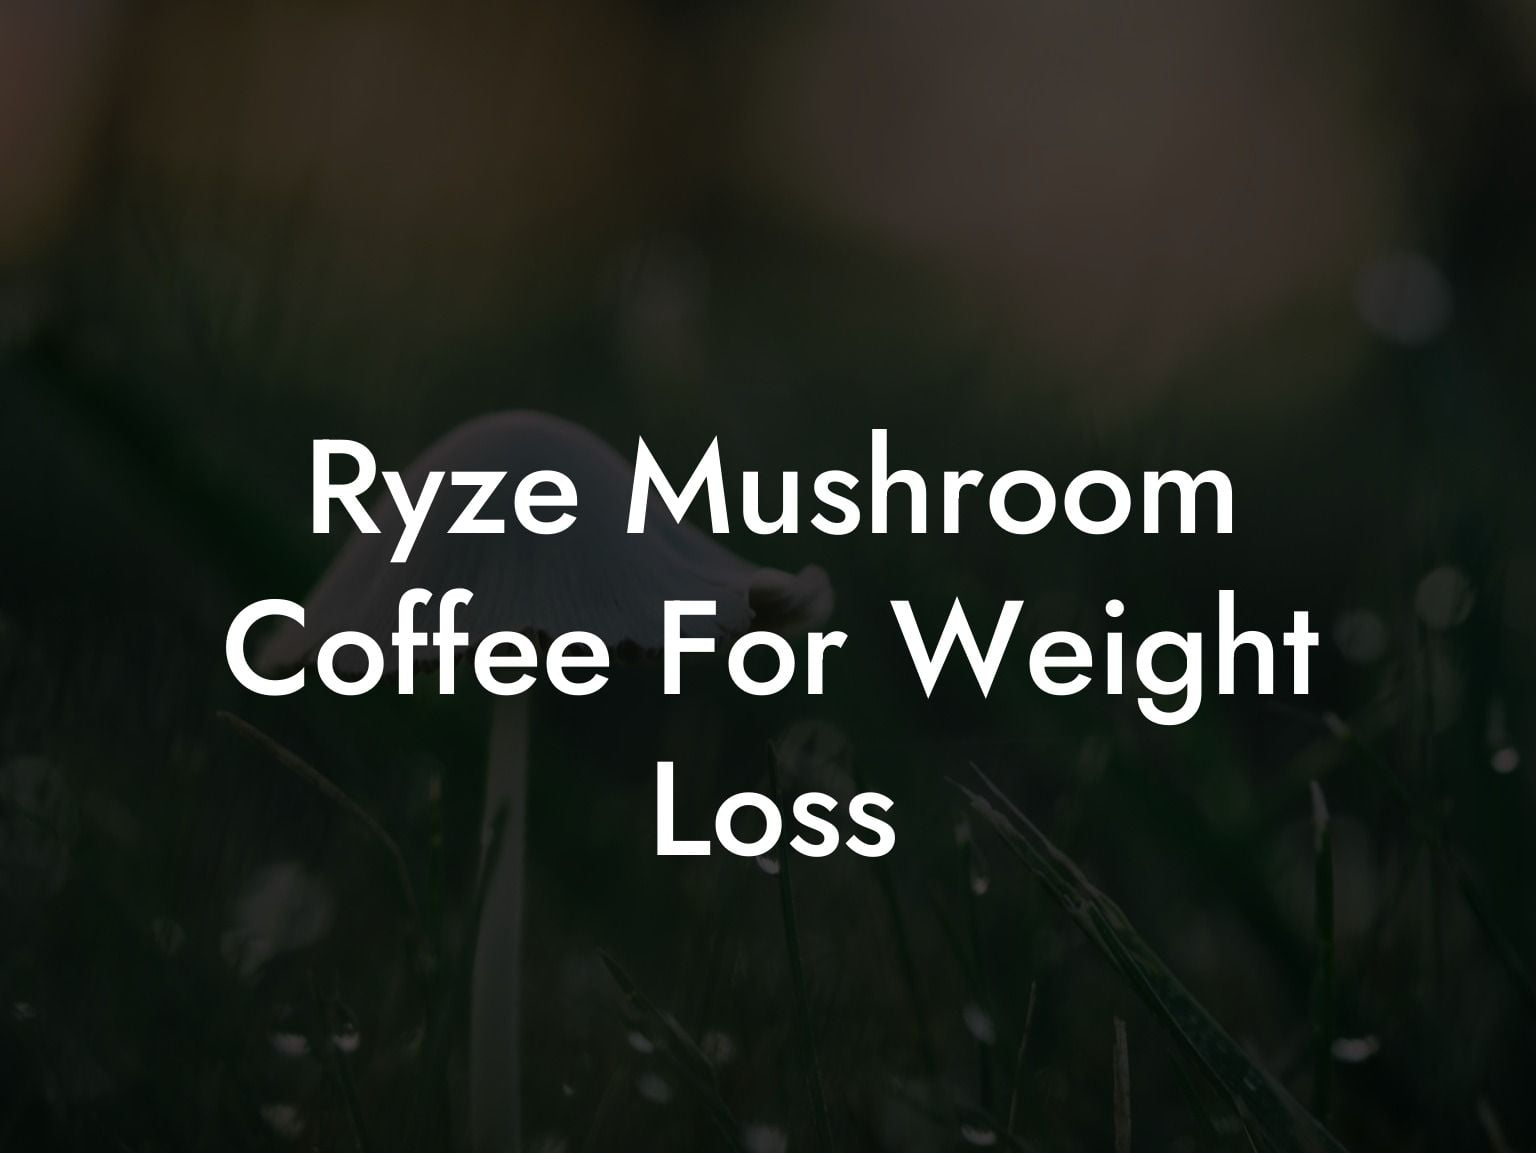 Ryze Mushroom Coffee For Weight Loss